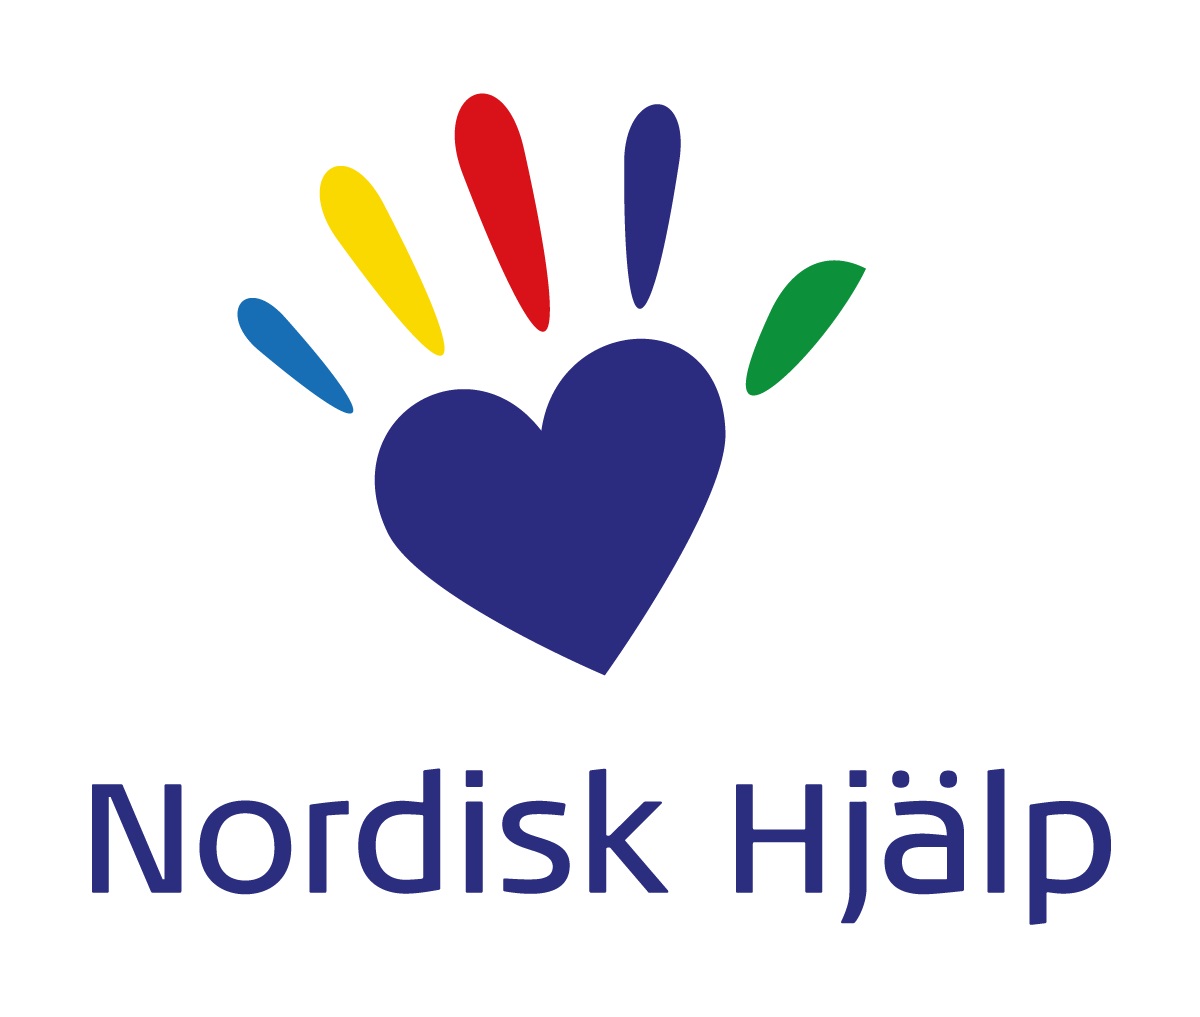 Nordisk Hjälp